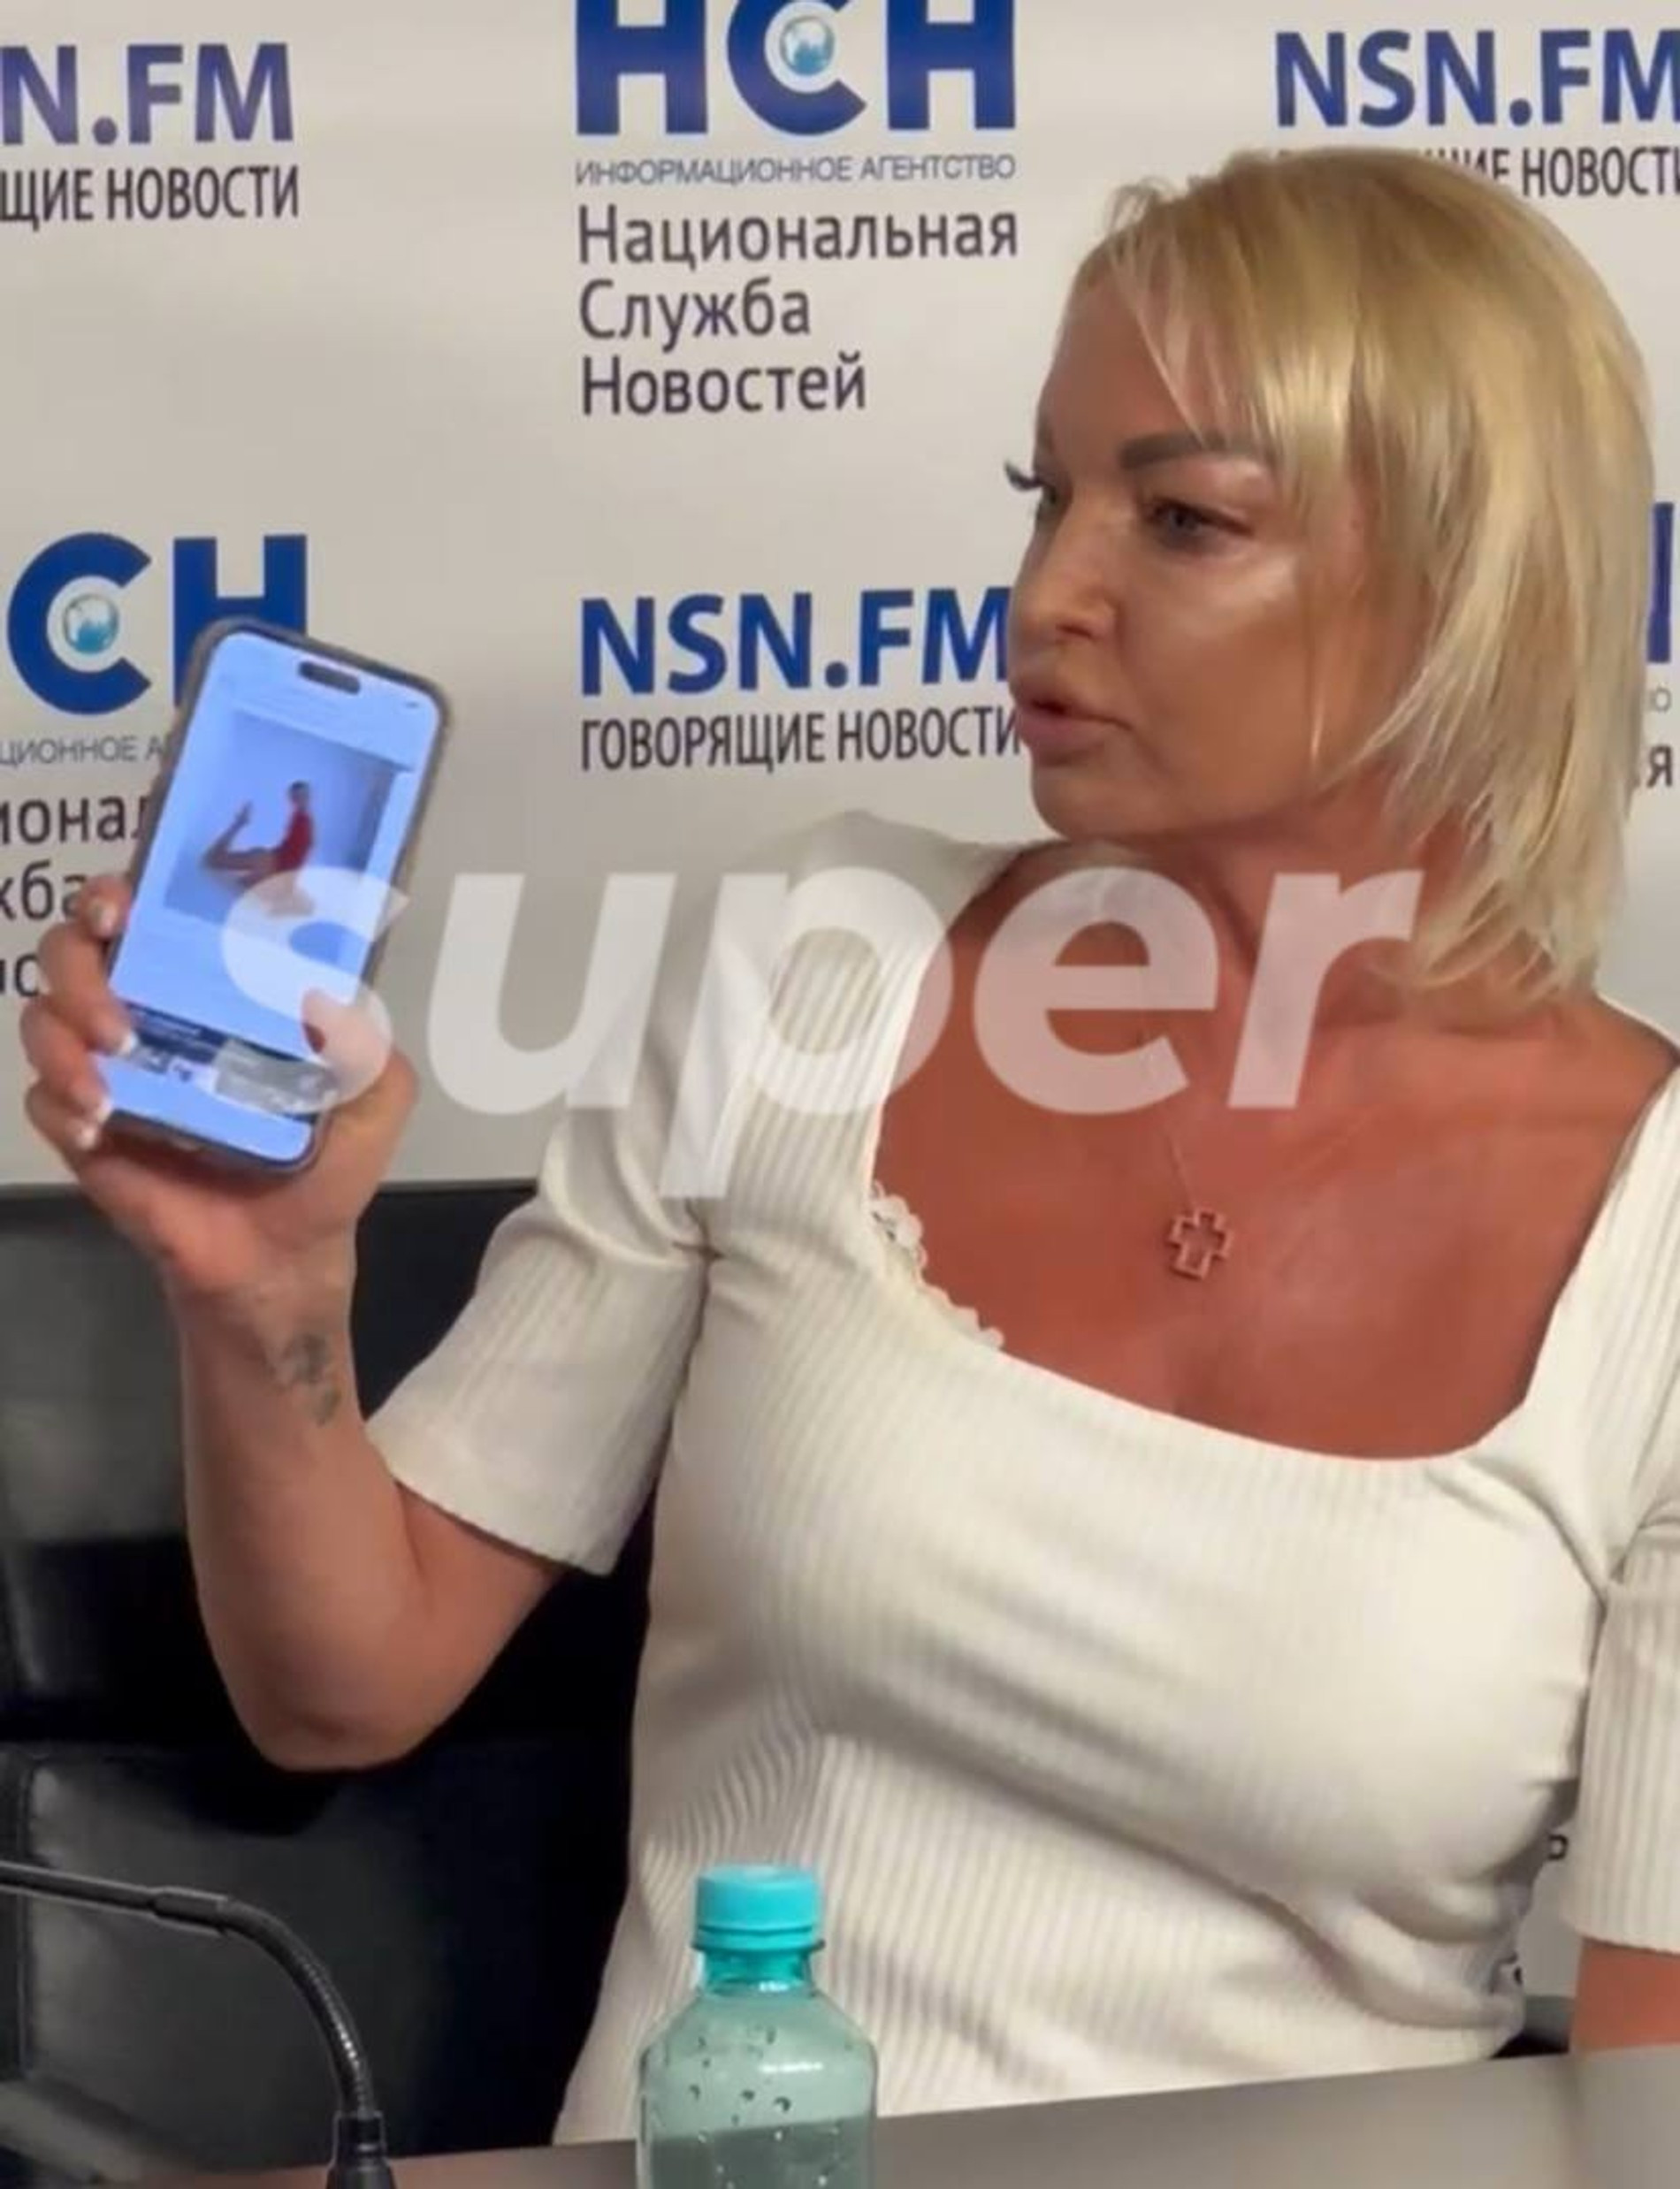 Анастасия Волочкова на пресс-конференции. Фото: Super